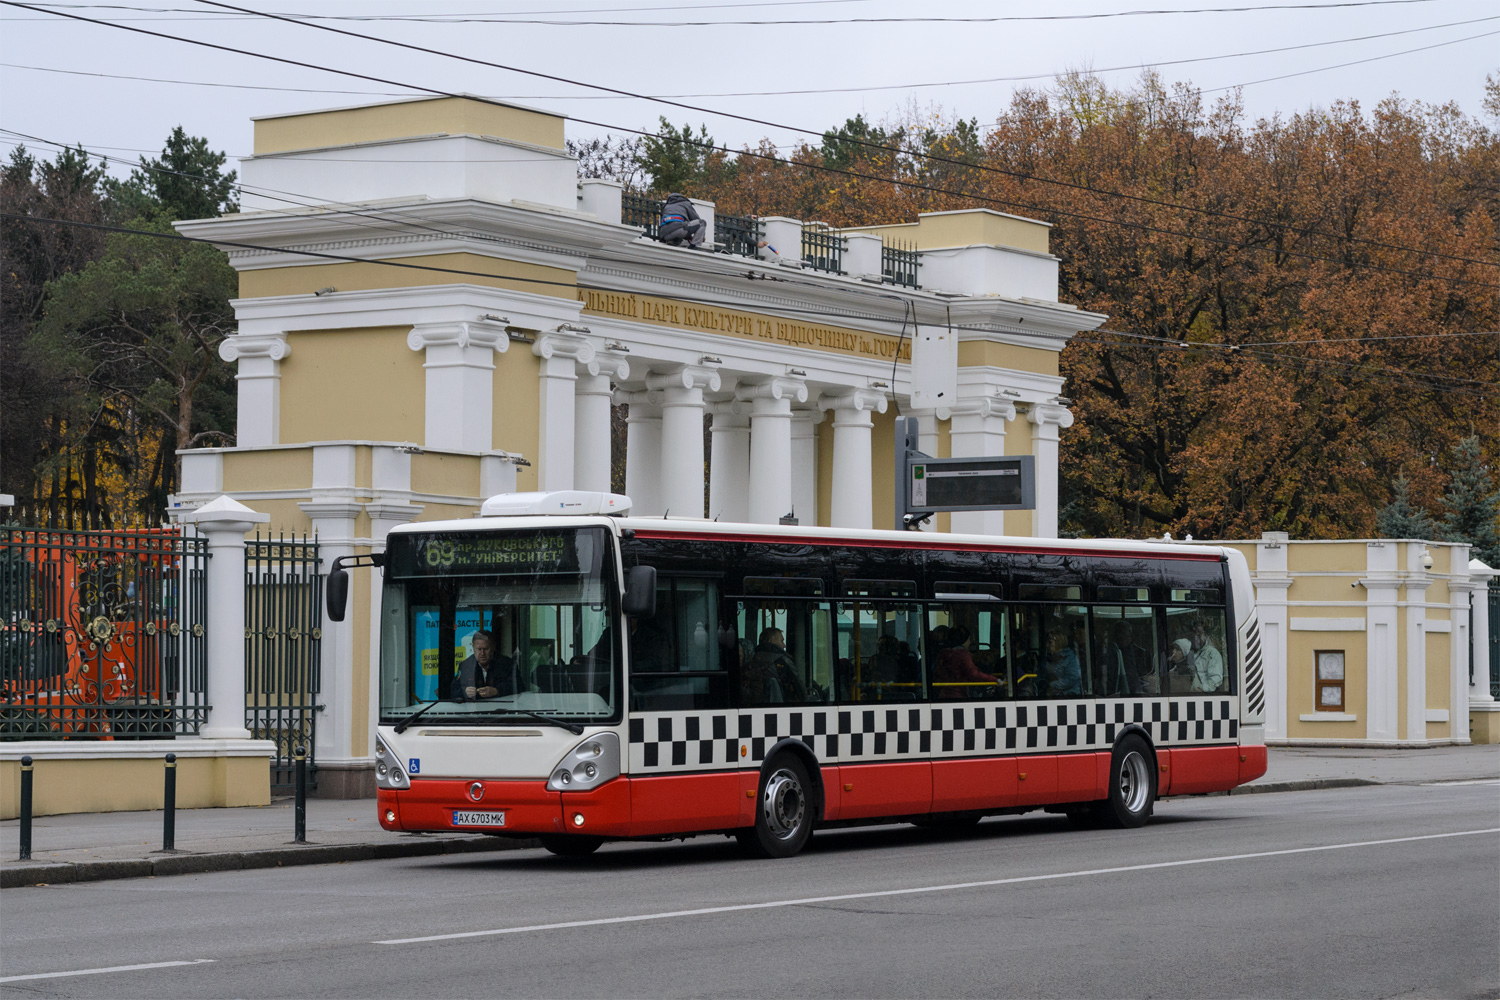 Kharkiv, Irisbus Citelis 12M # 1342